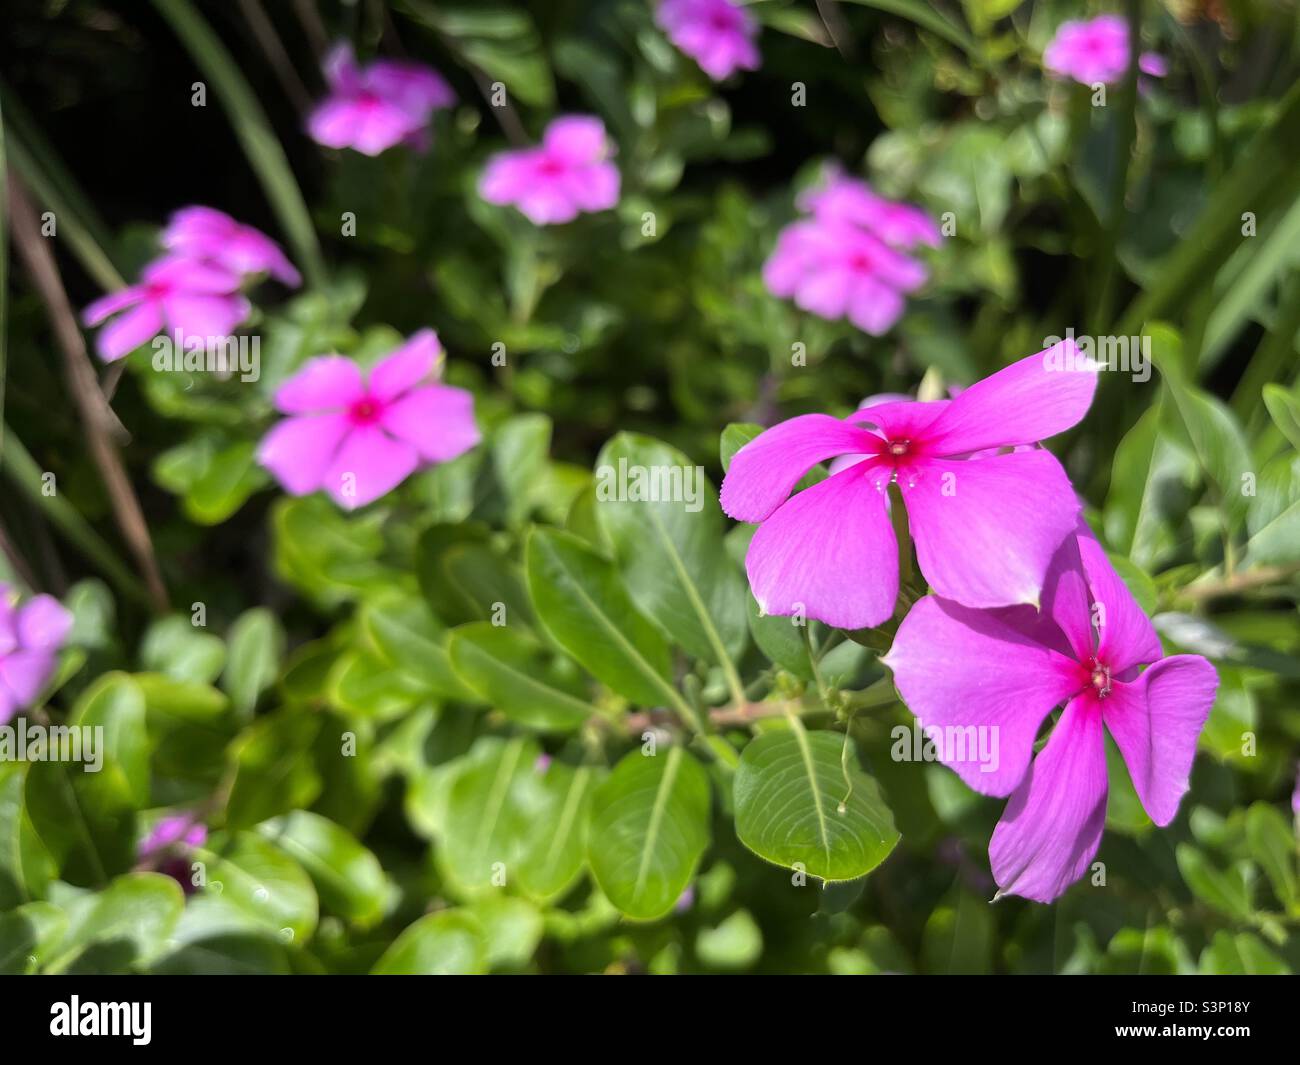 Pink Vinca Periwinkle flowers Stock Photo